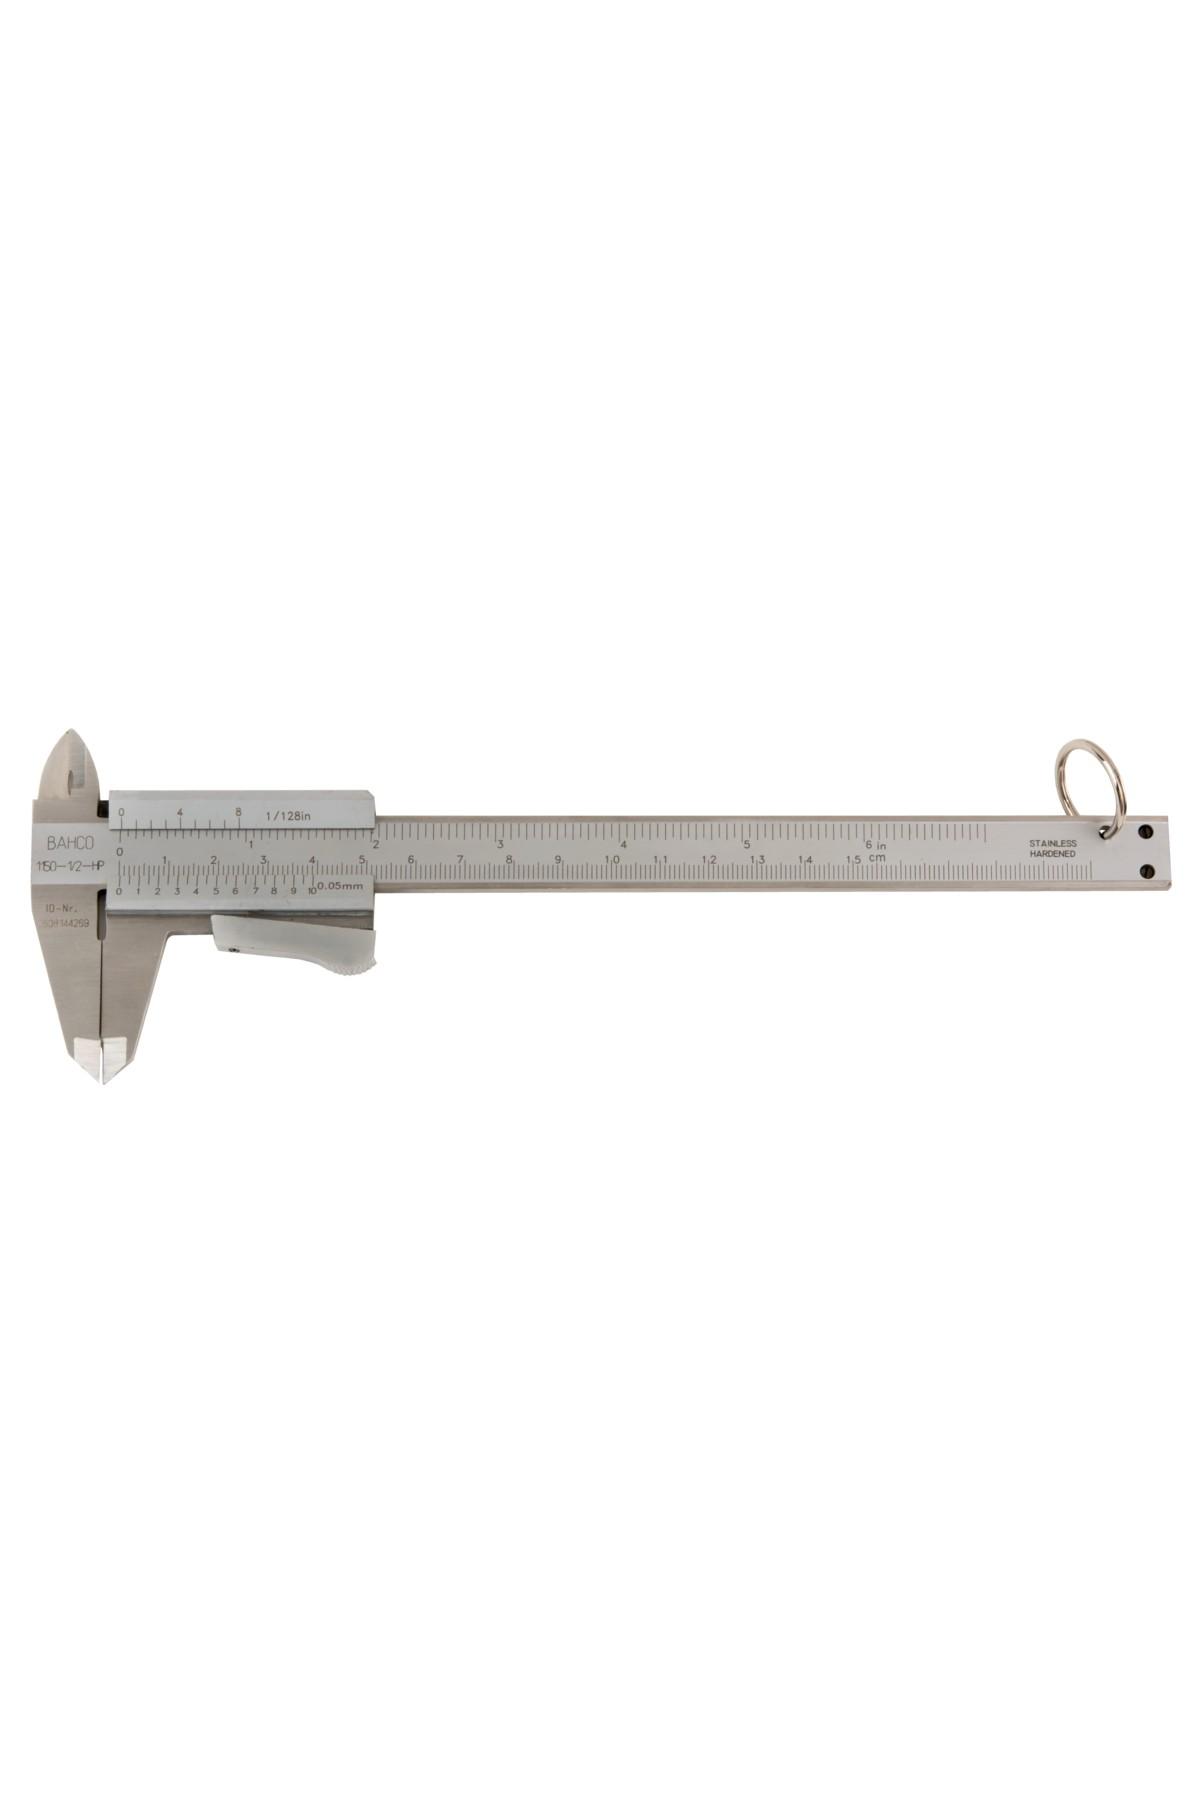 Caliper 0-150 mm height-secured